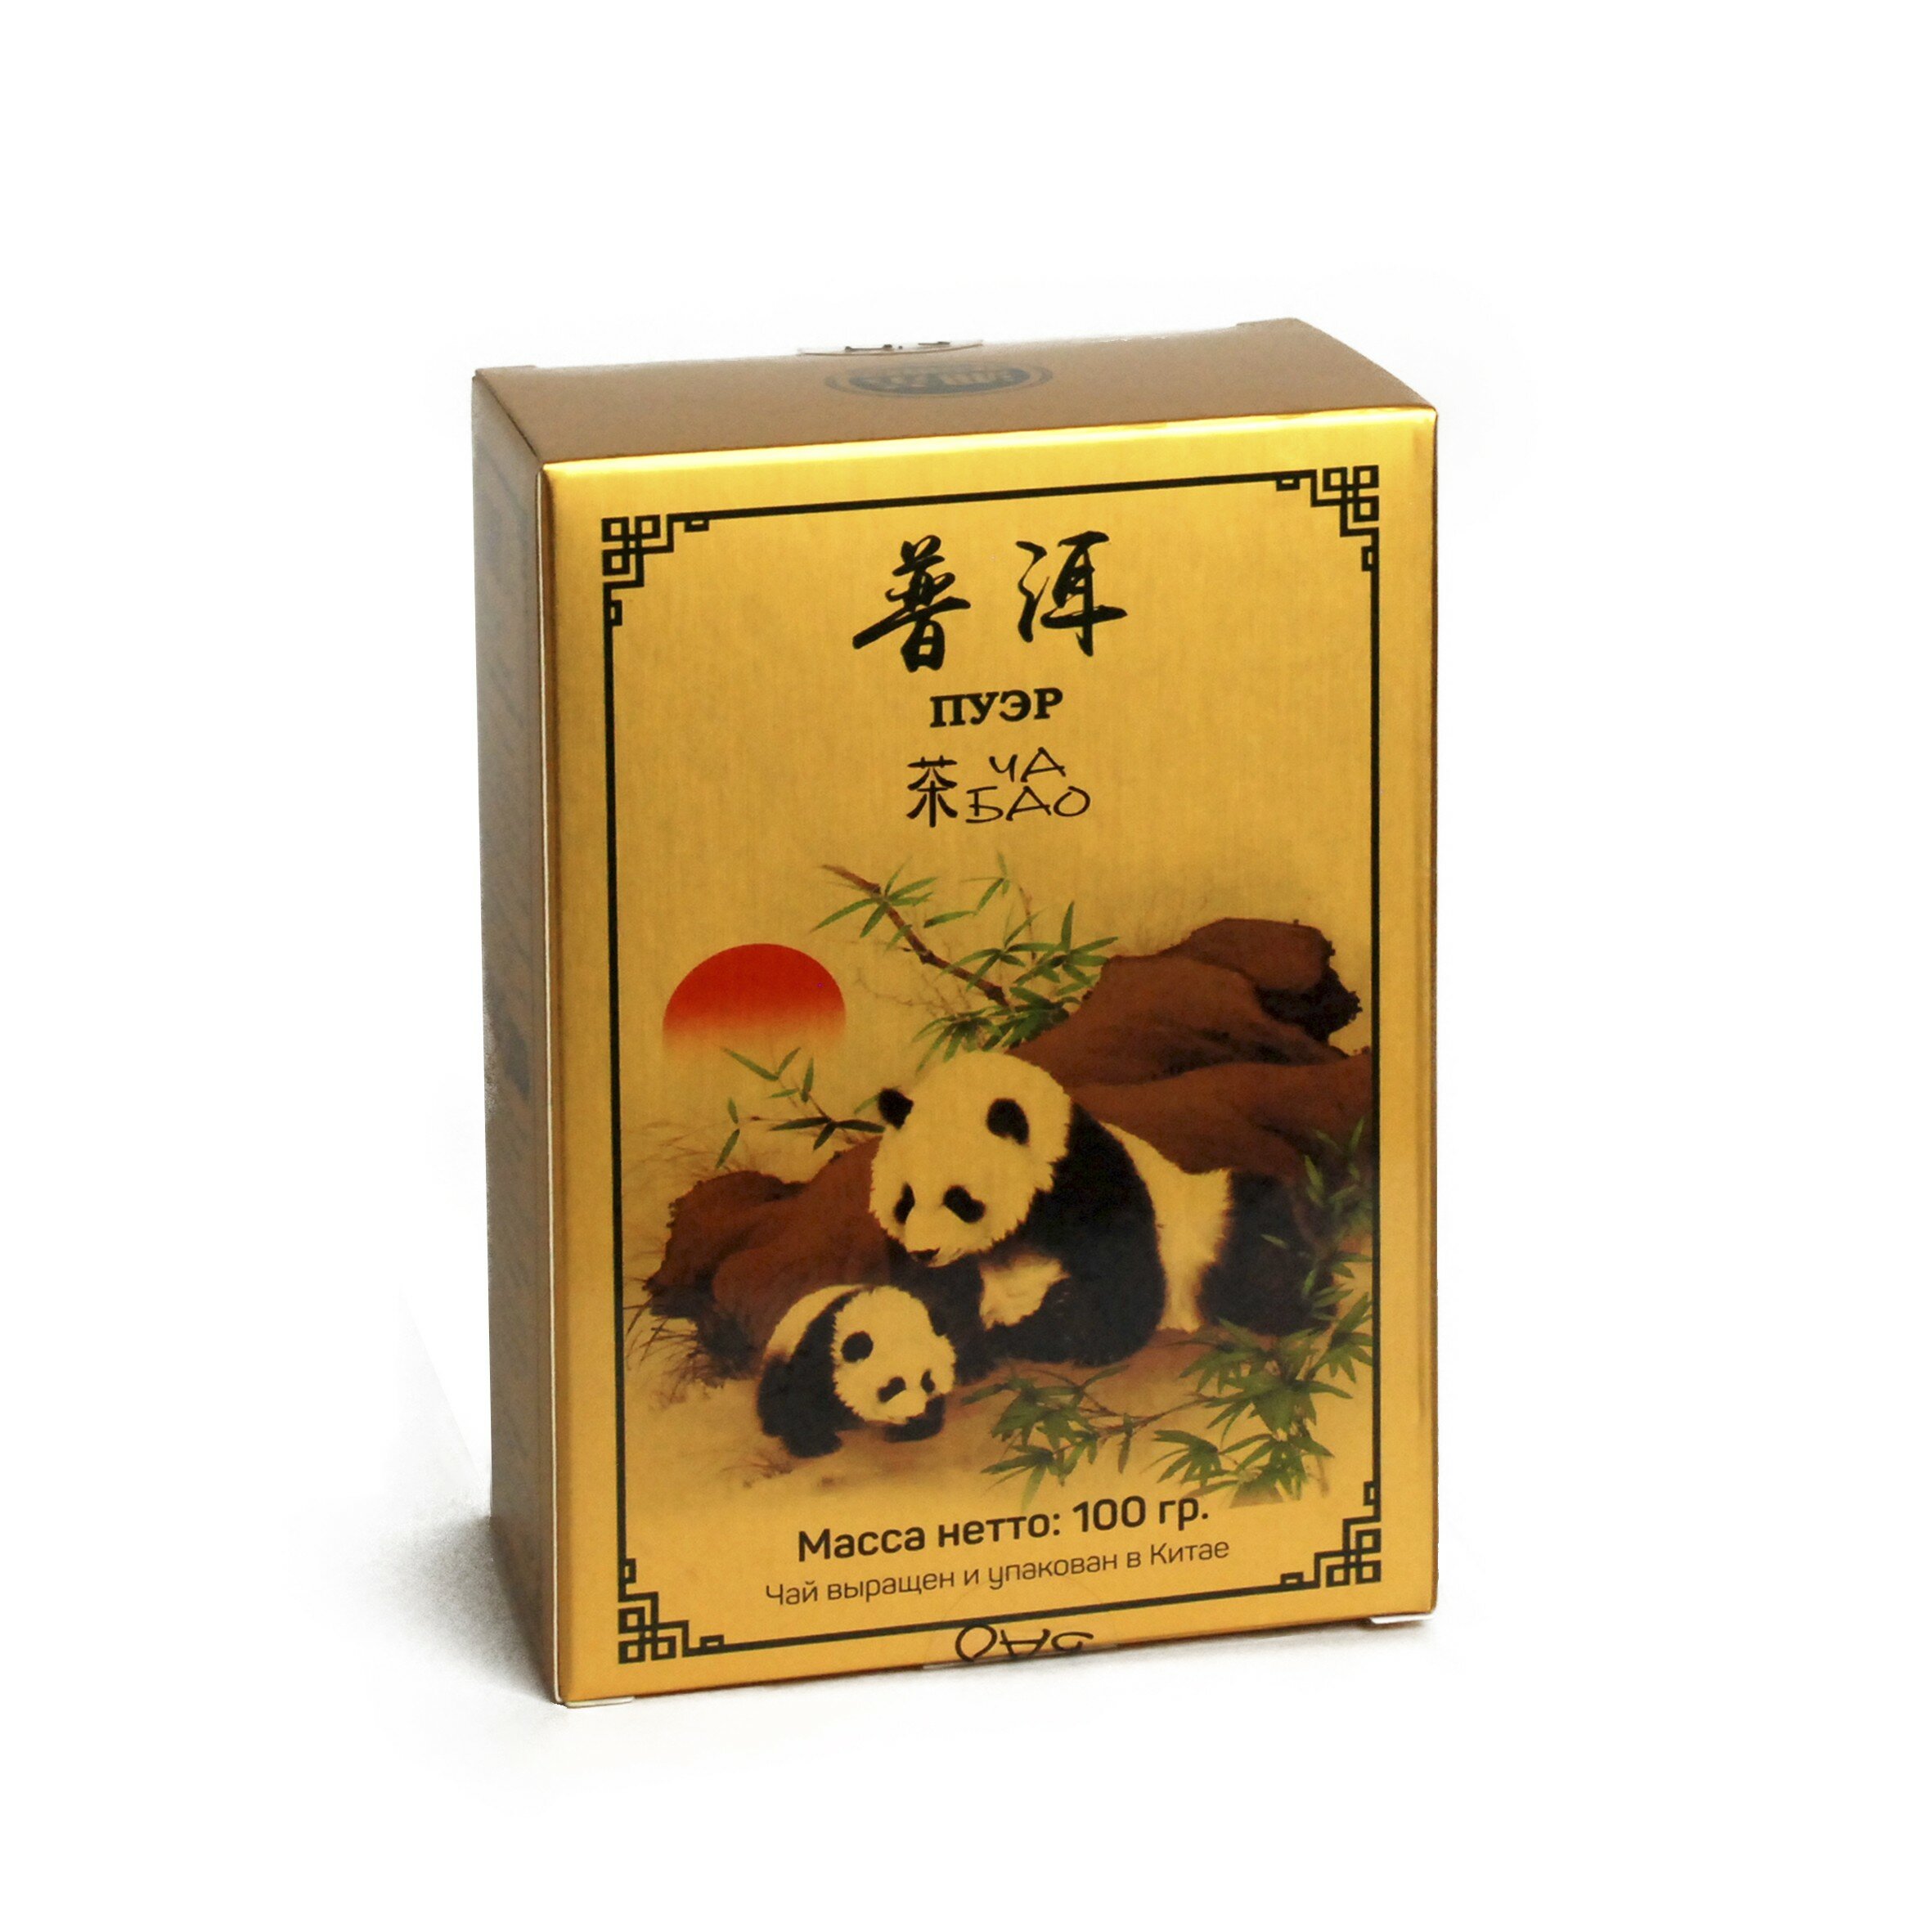 Чай пуэр ТМ "Ча Бао" - Пу Эр, картон, Китай, 100 гр. - фотография № 6